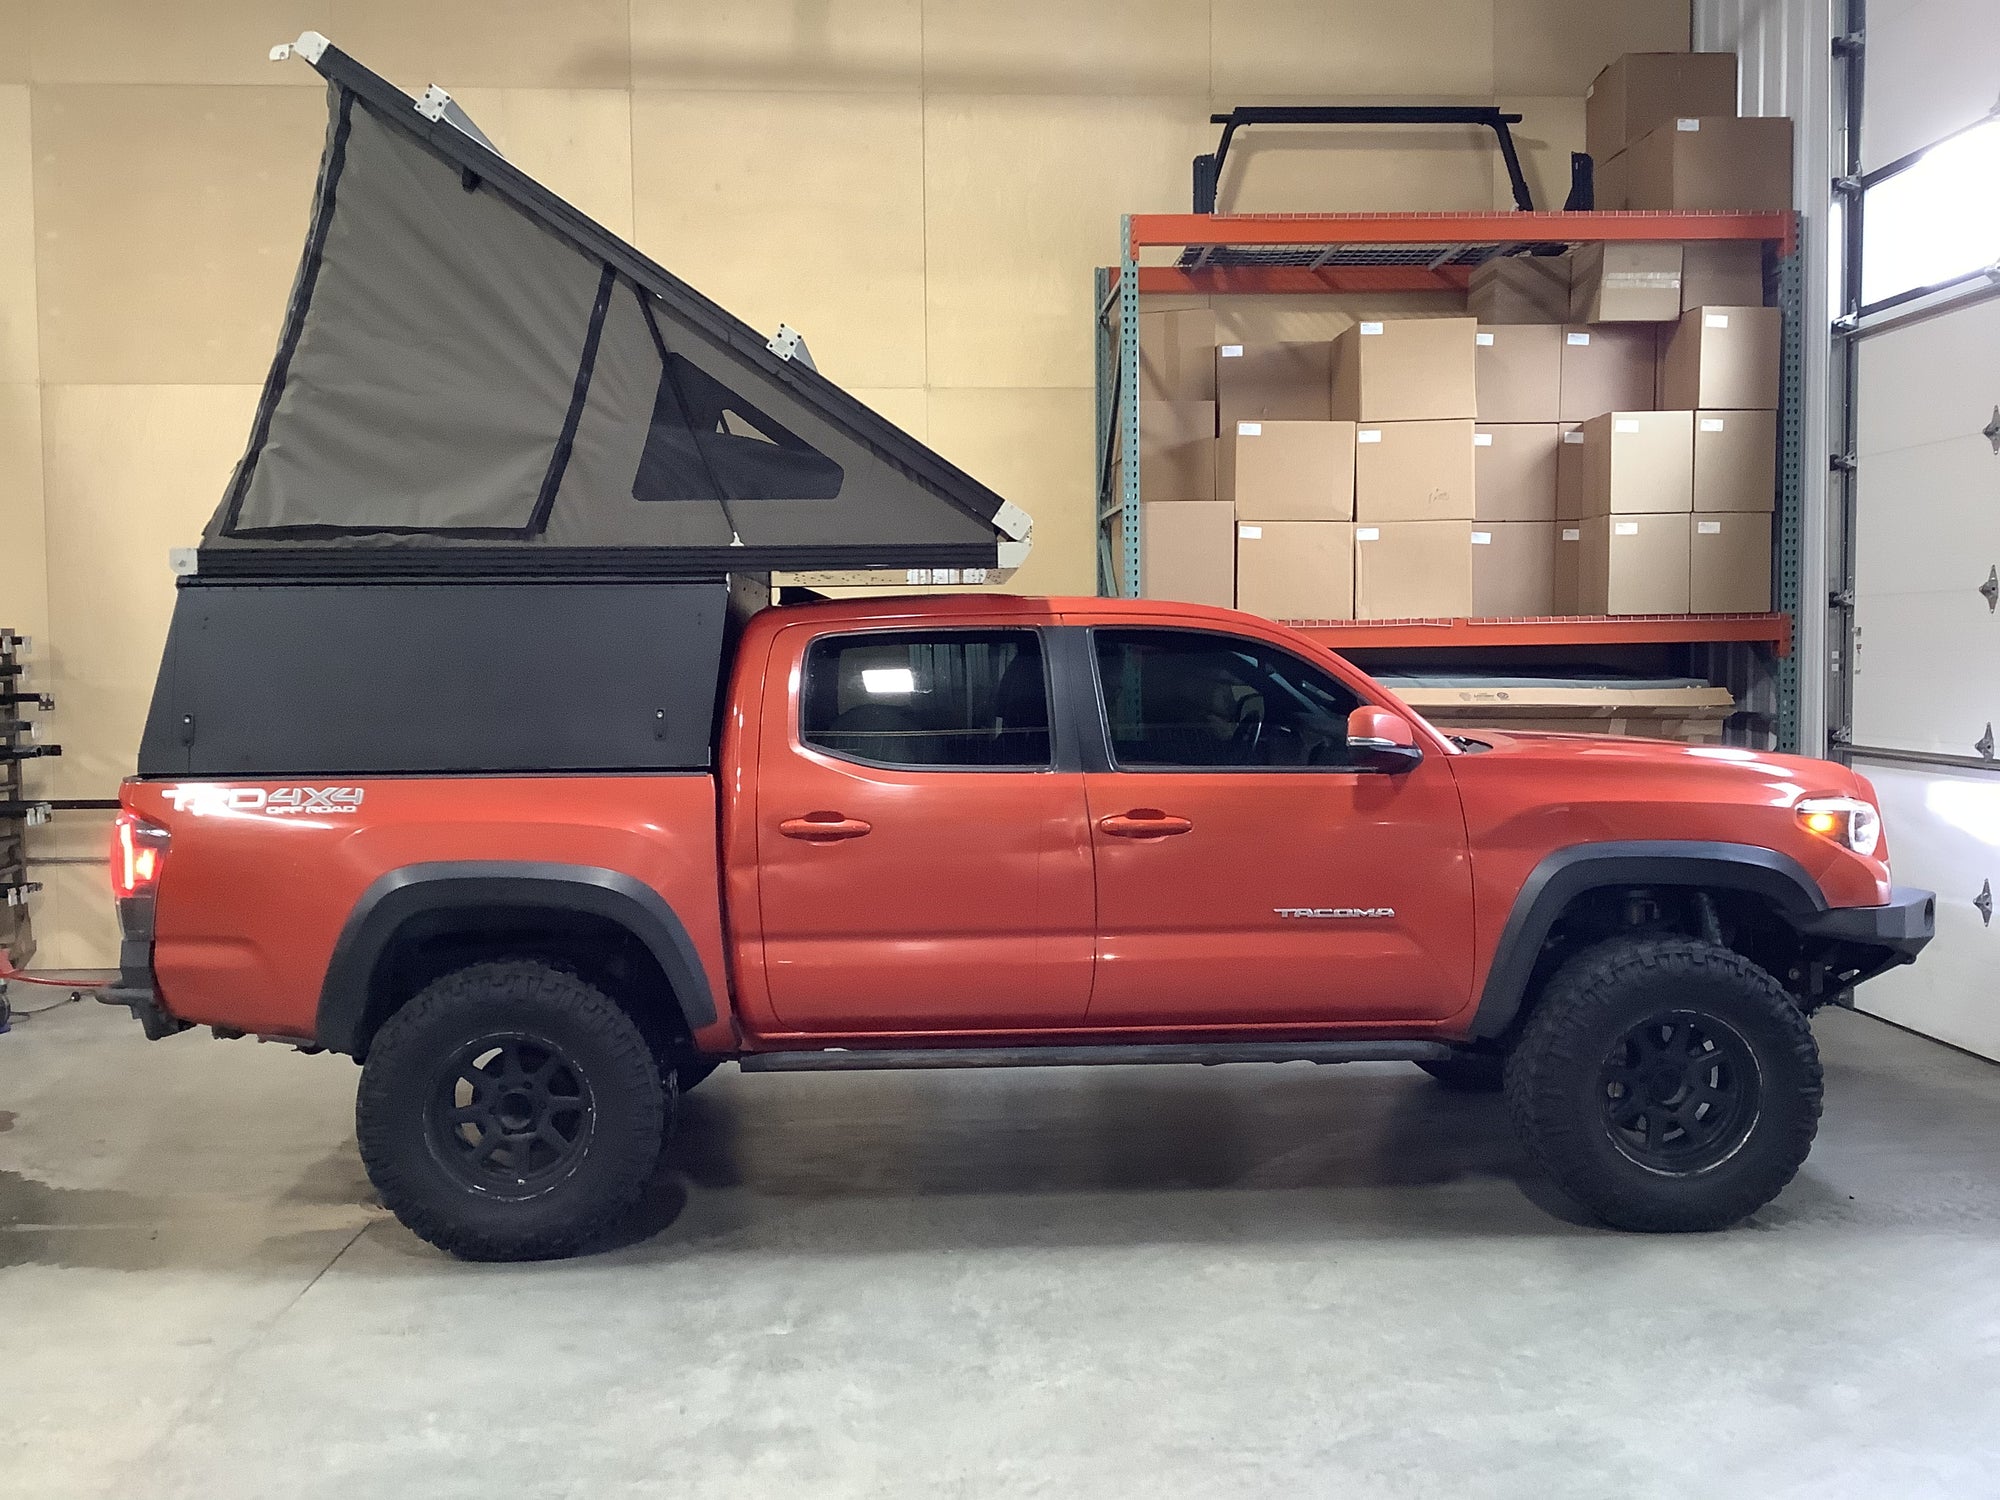 2017 Toyota Tacoma Camper - Build #3629